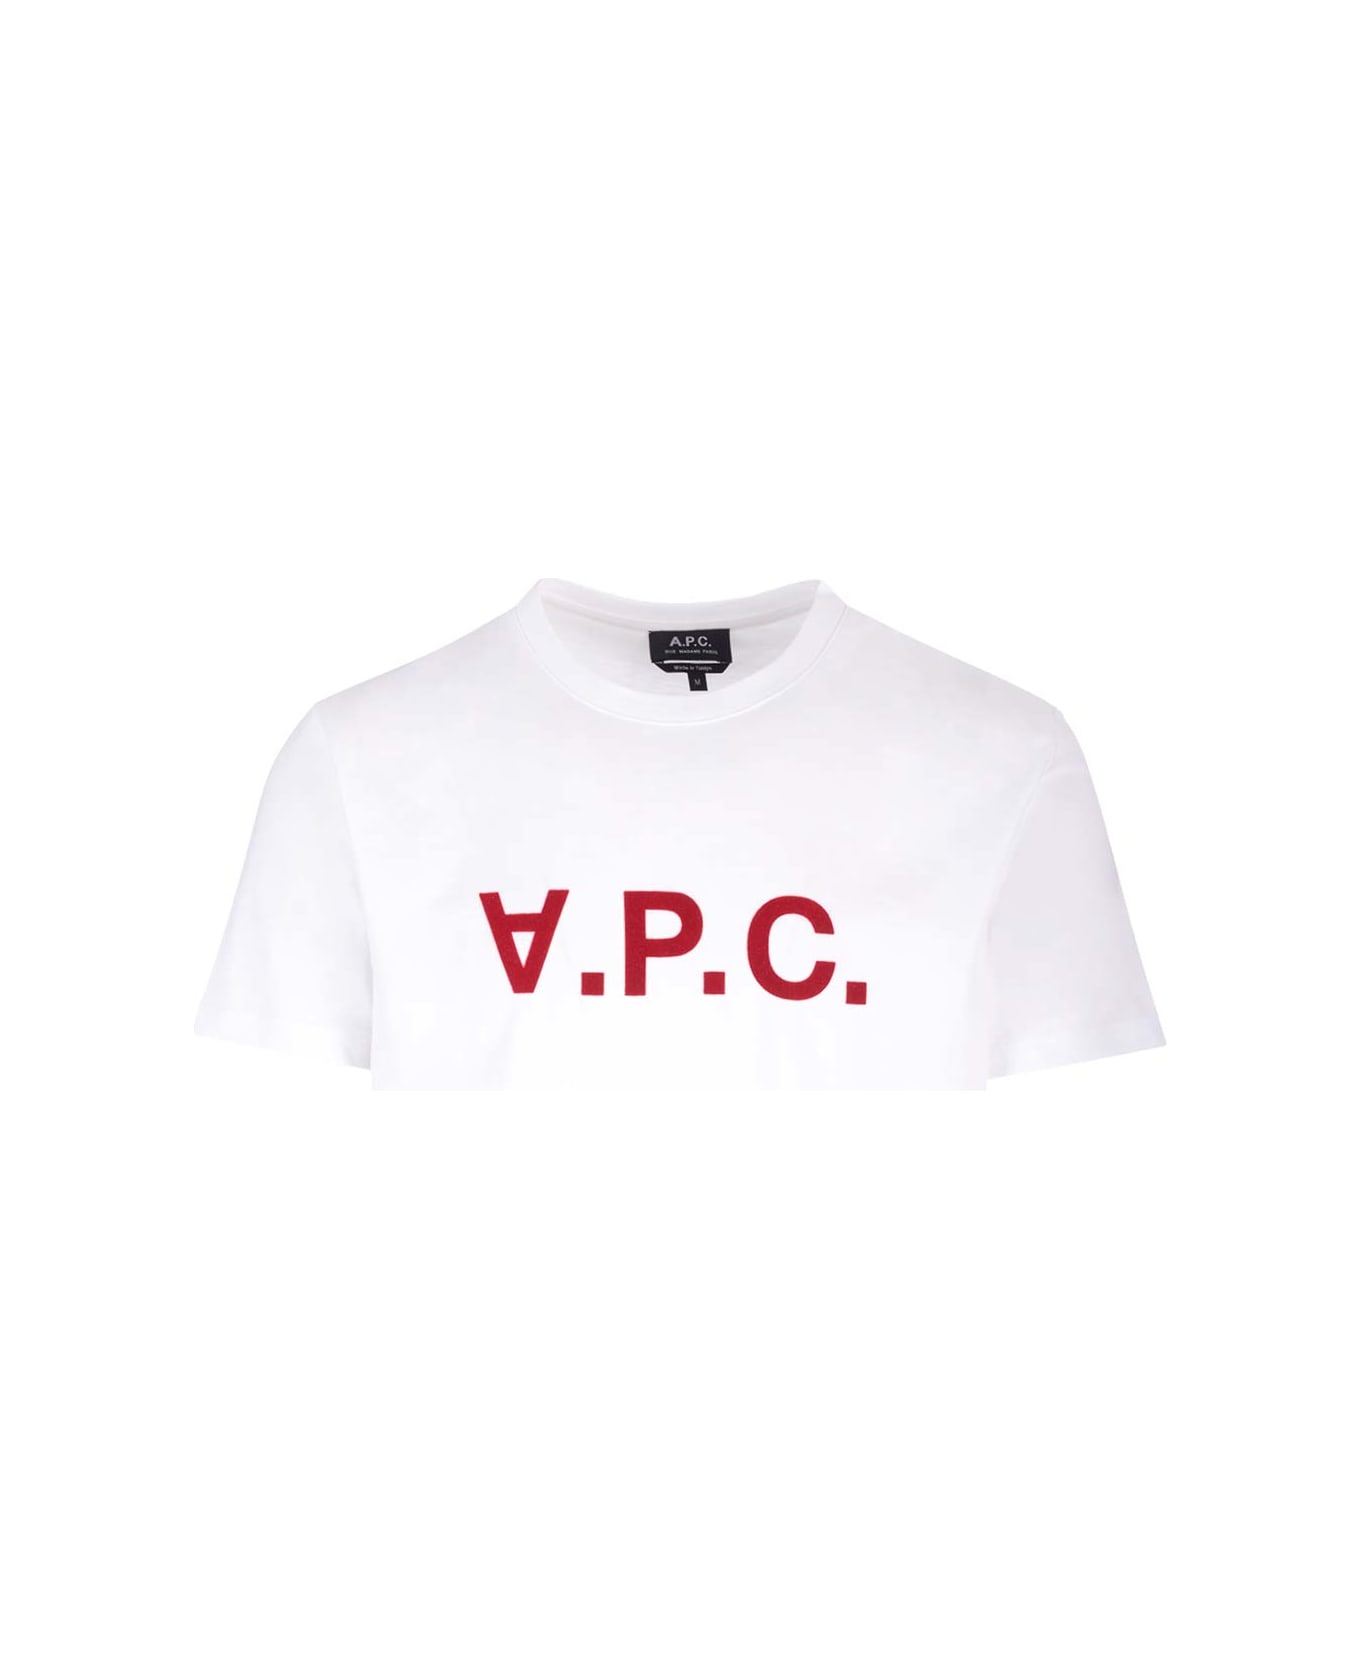 A.P.C. 'vpc' T-shirt